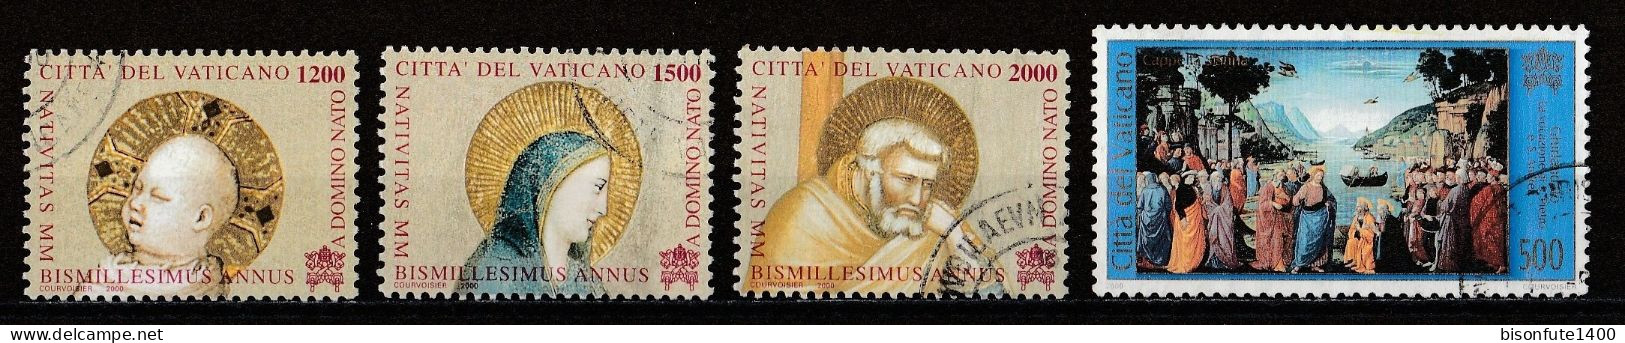 Vatican 2000 : Timbres Yvert & Tellier N° 1183 - 1196 - 1199 - 1201 - 1209 - 1210 - 1211 - 1212 Et 1216 Oblitérés - Used Stamps